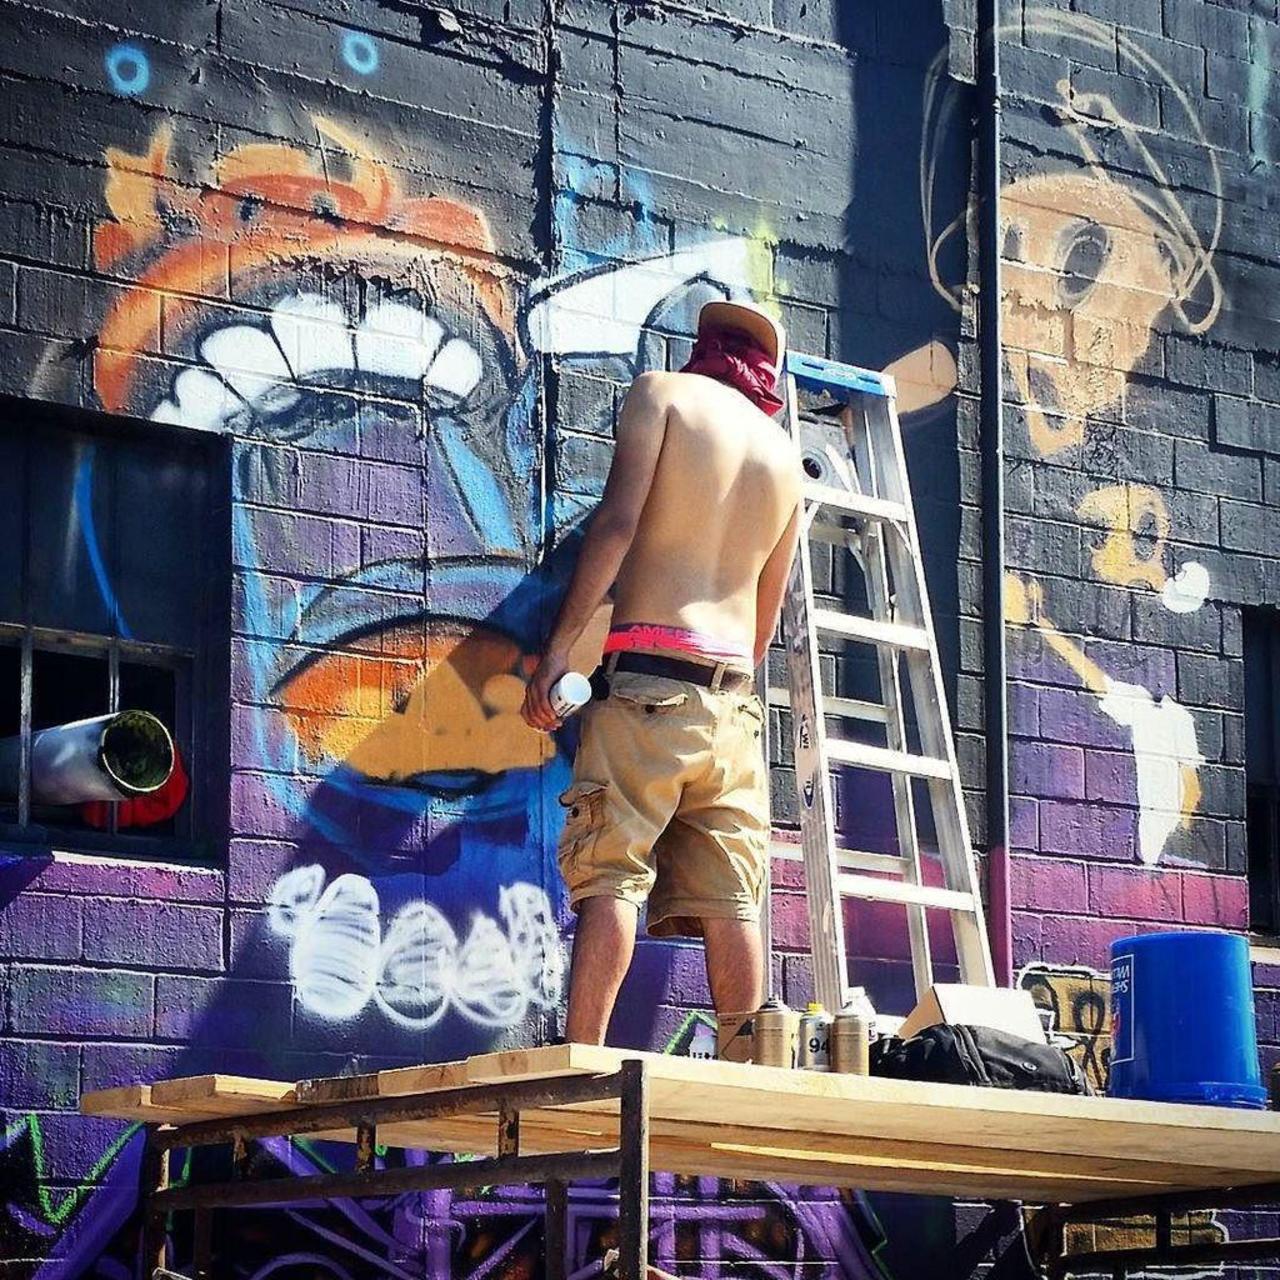 RT @artpushr: via #minlgzfont "http://bit.ly/1GycnXc" #graffiti #streetart http://t.co/dfI1WxOSts